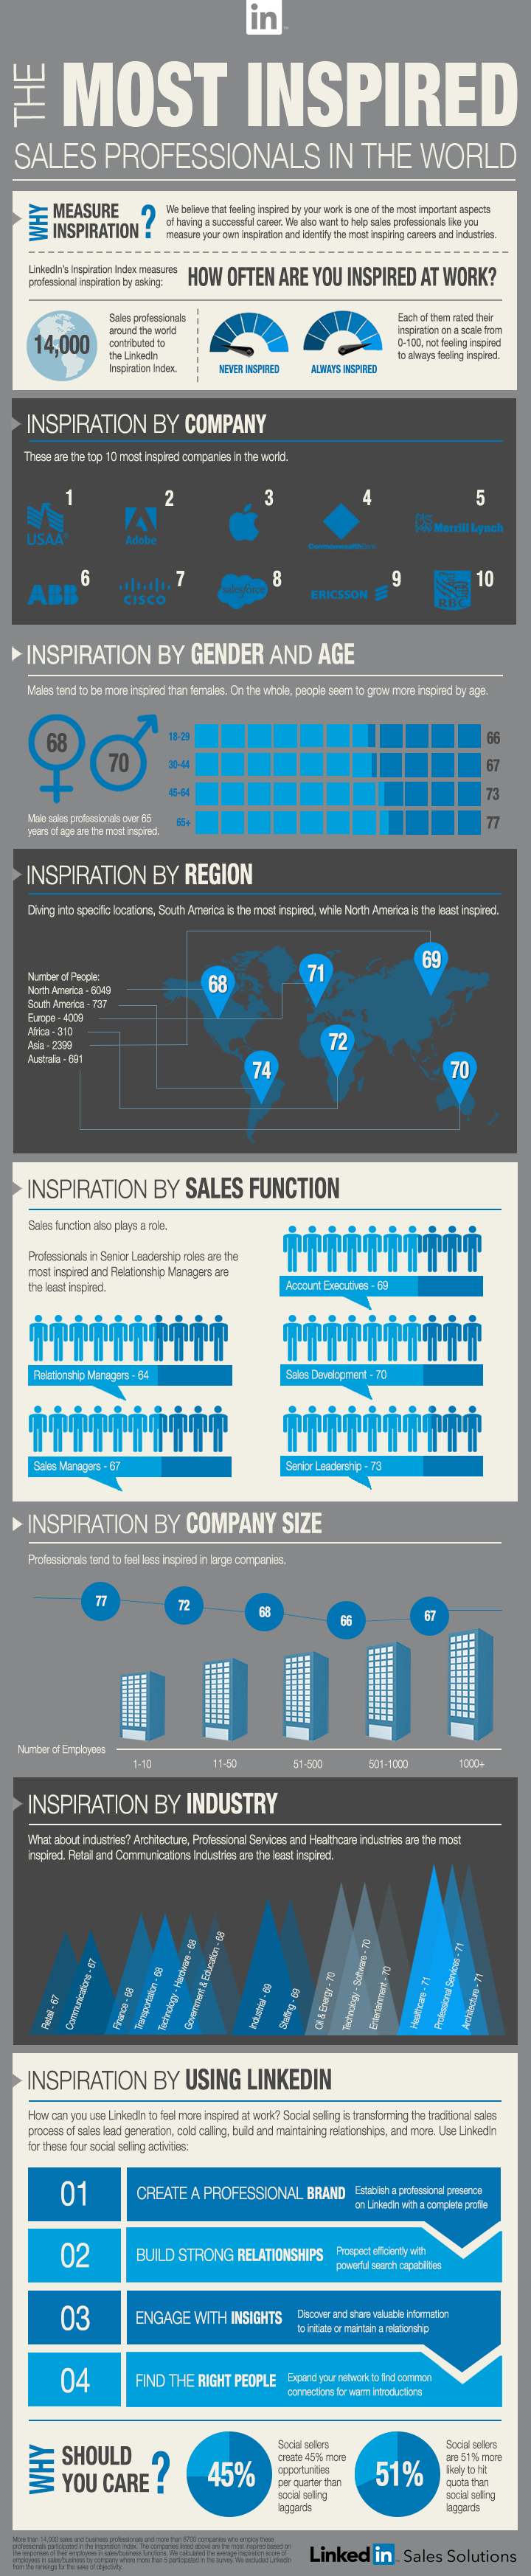 linkedin-inspiration-infographic